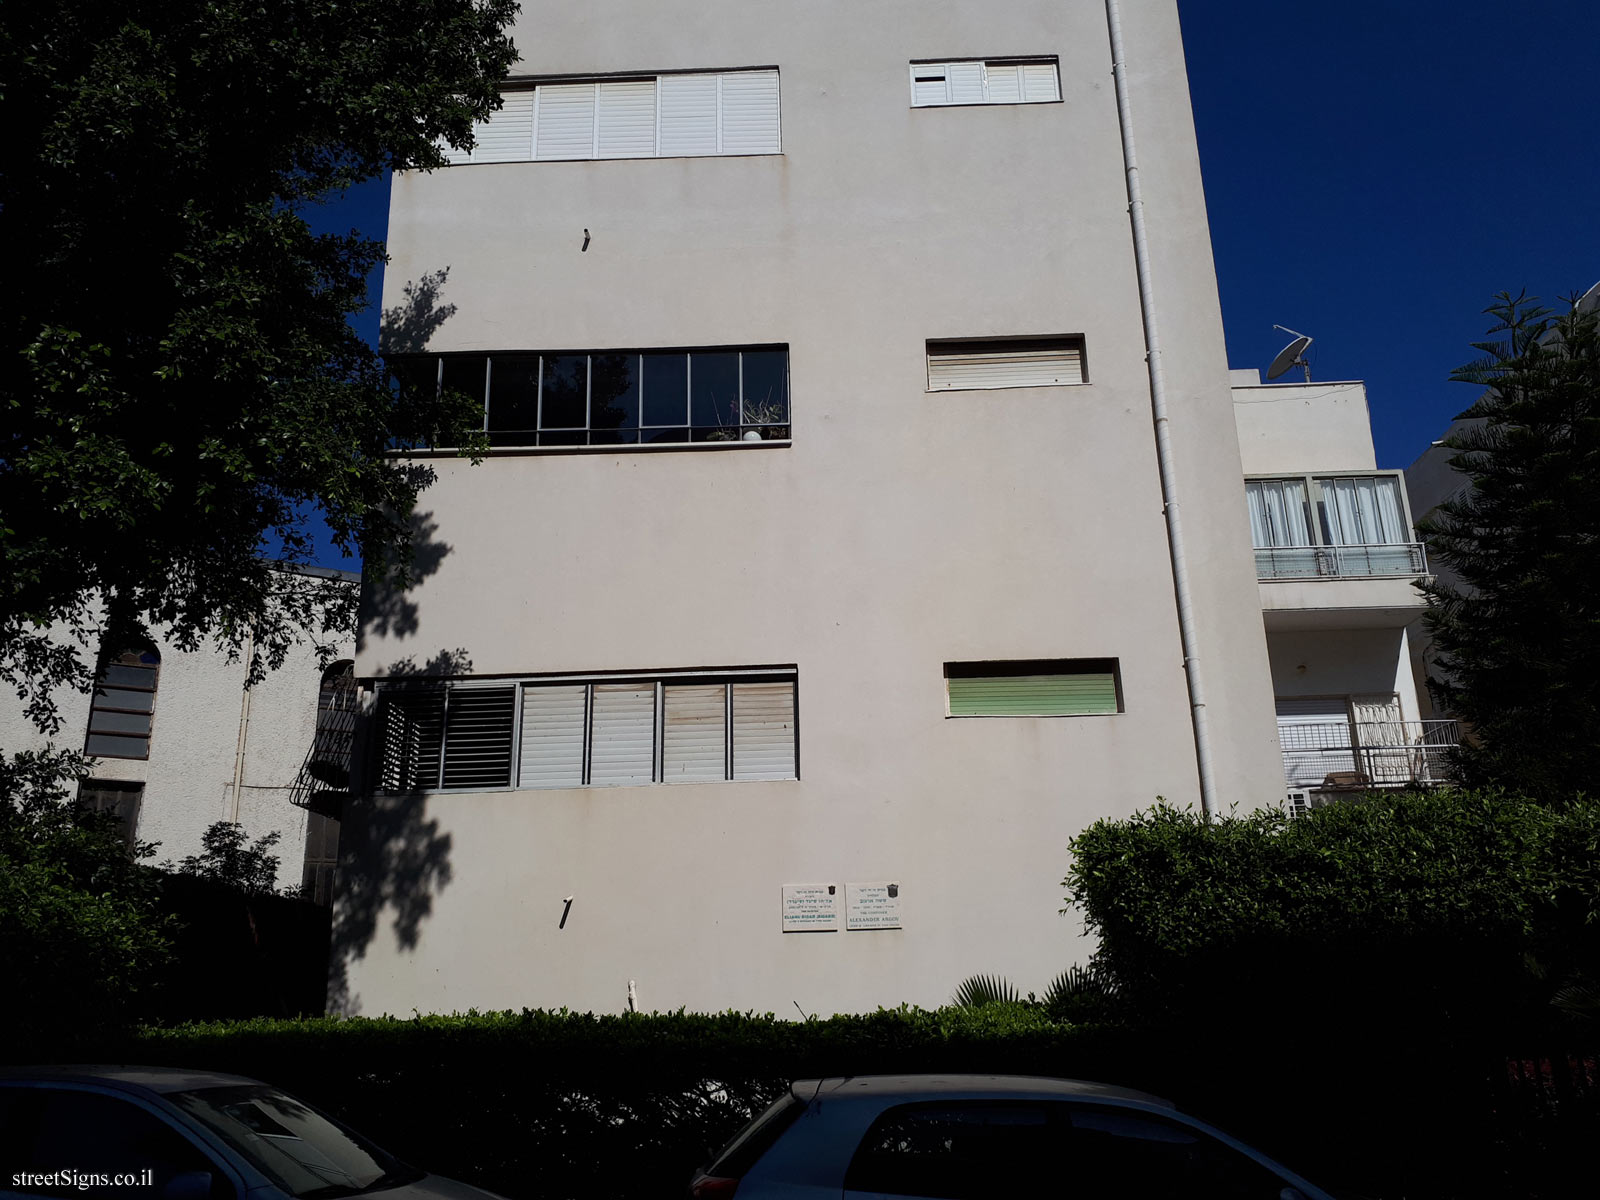 The house of Alexander Argov - Sirkin St 35, Tel Aviv-Yafo, Israel